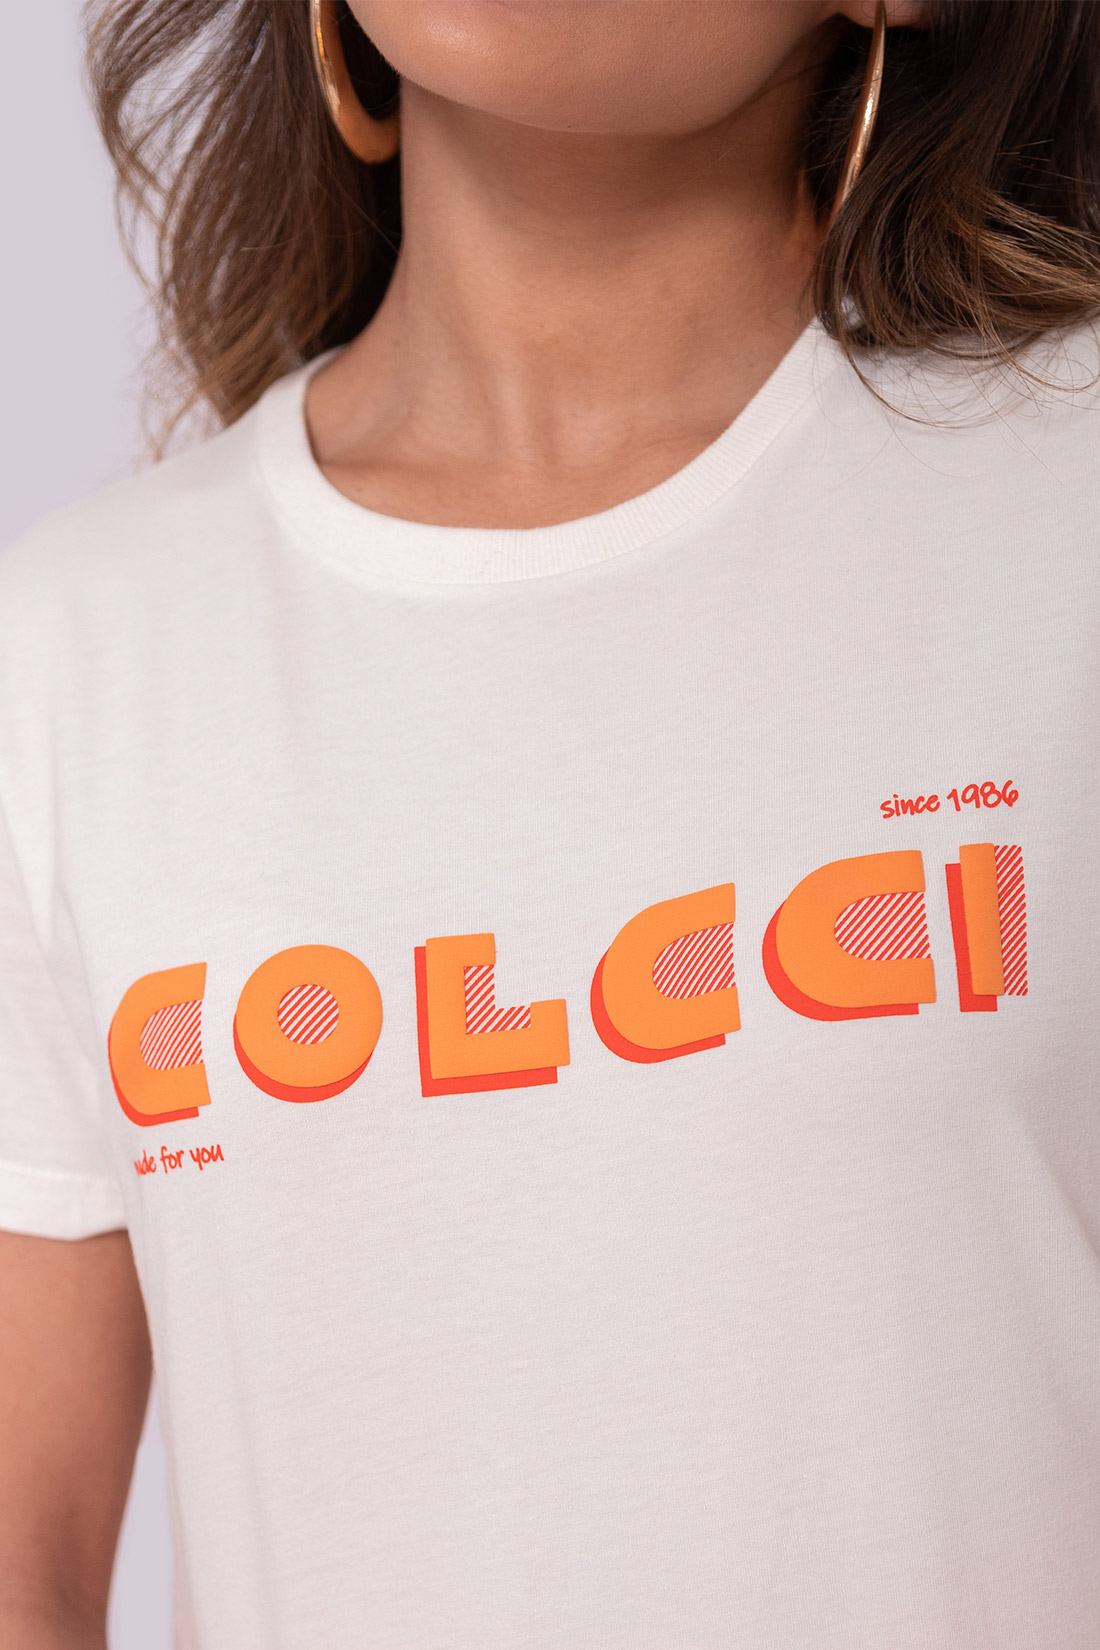 T Shirt Colcci Made For You